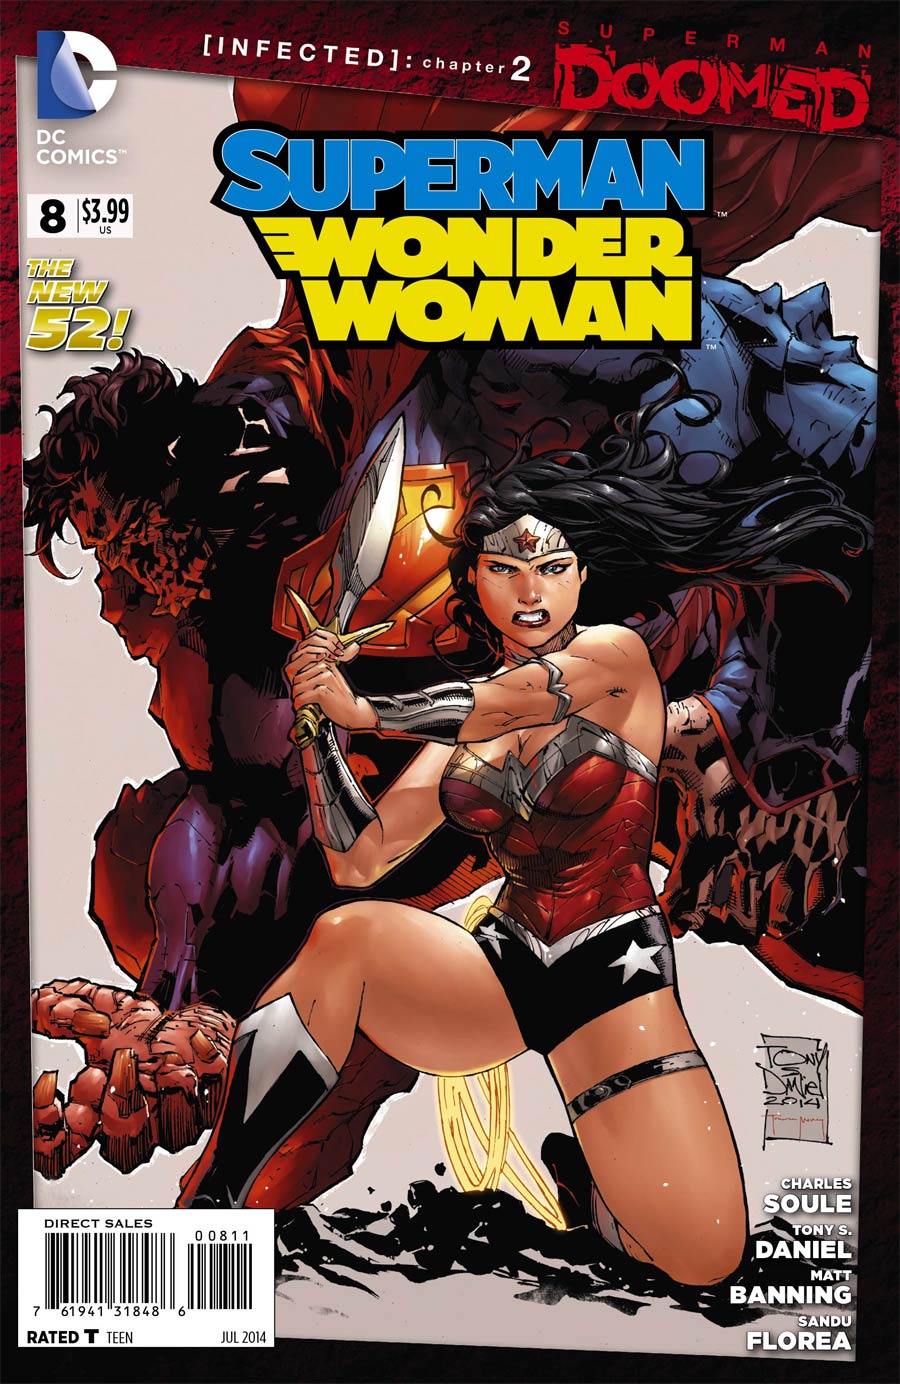 Superman Wonder Woman #8 Cover A 1st Ptg Regular Tony S Daniel Cover (Superman Doomed Tie-In)